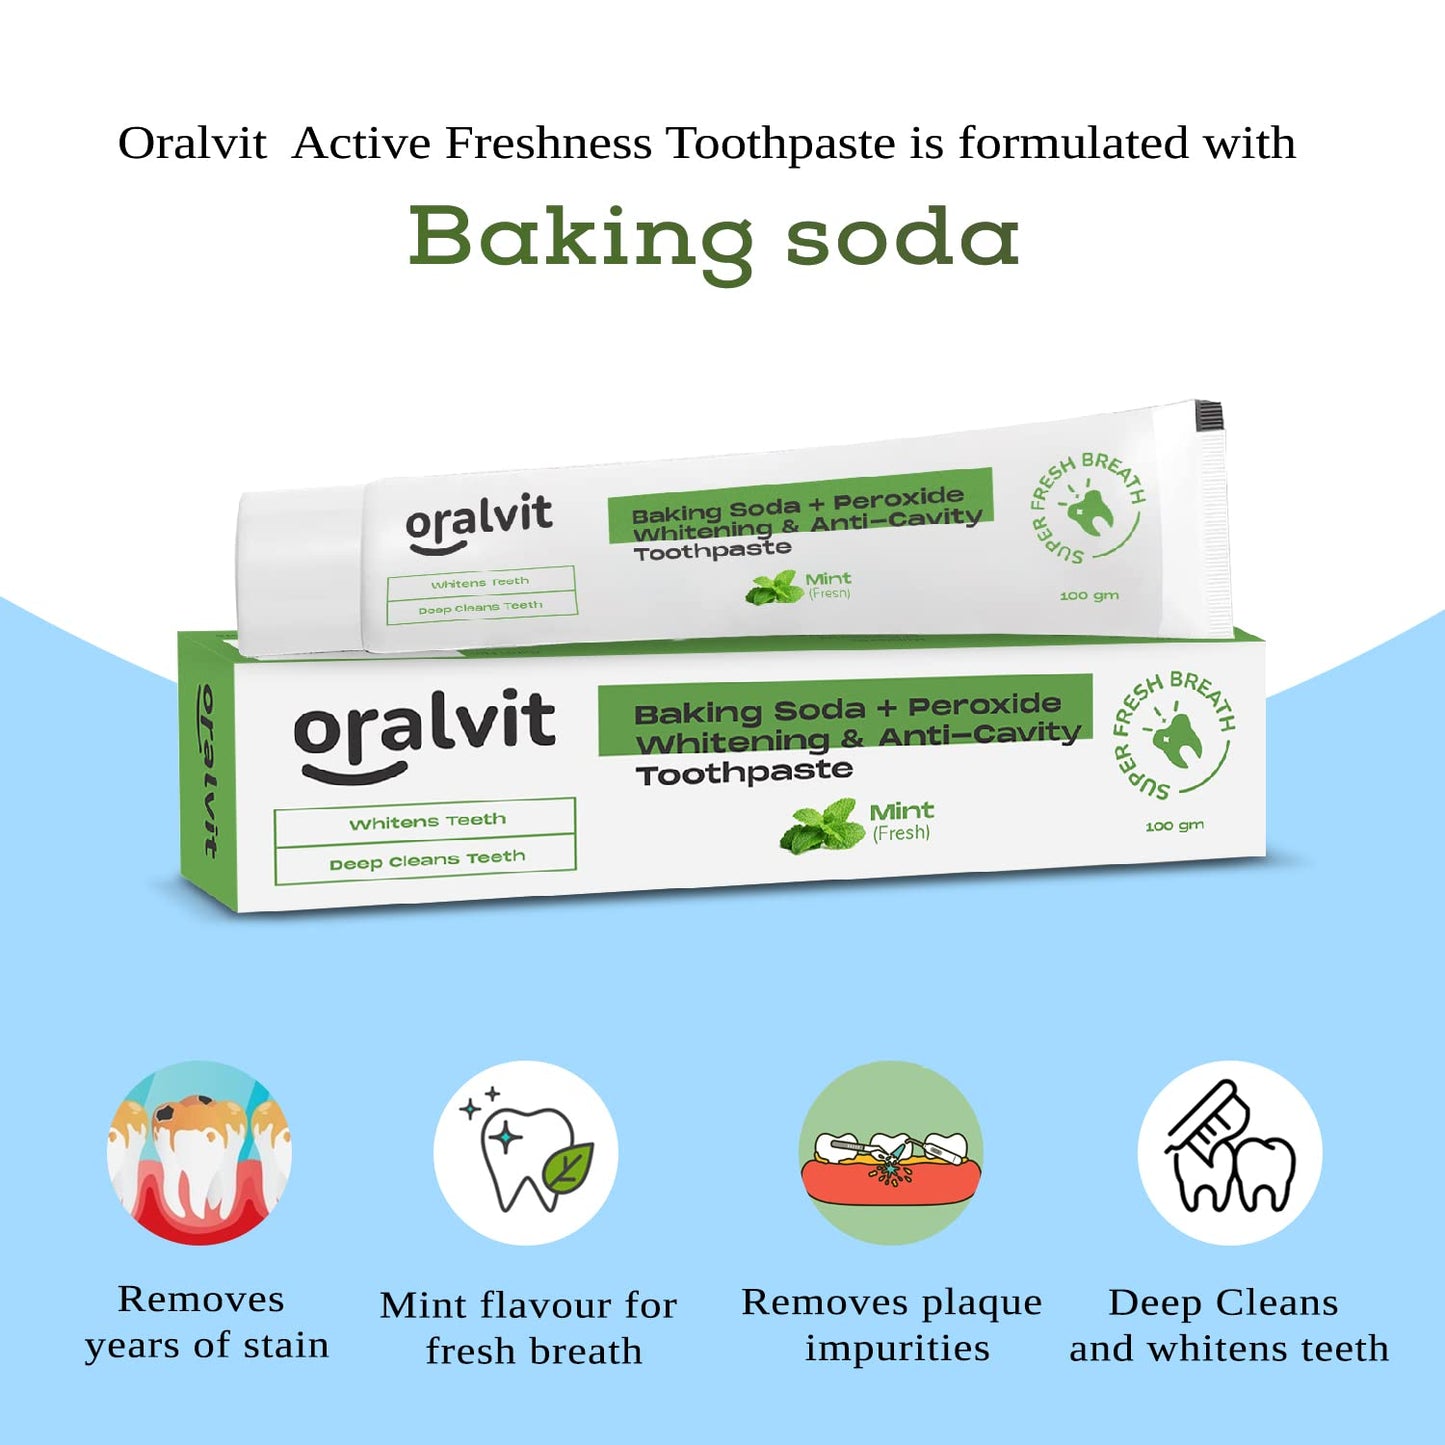 Oralvit Baking Soda & Peroxide Toothpaste, Mint, 100gm: Whitening, Anti-Cavity, Deep Cleanse, Super Fresh Breath.